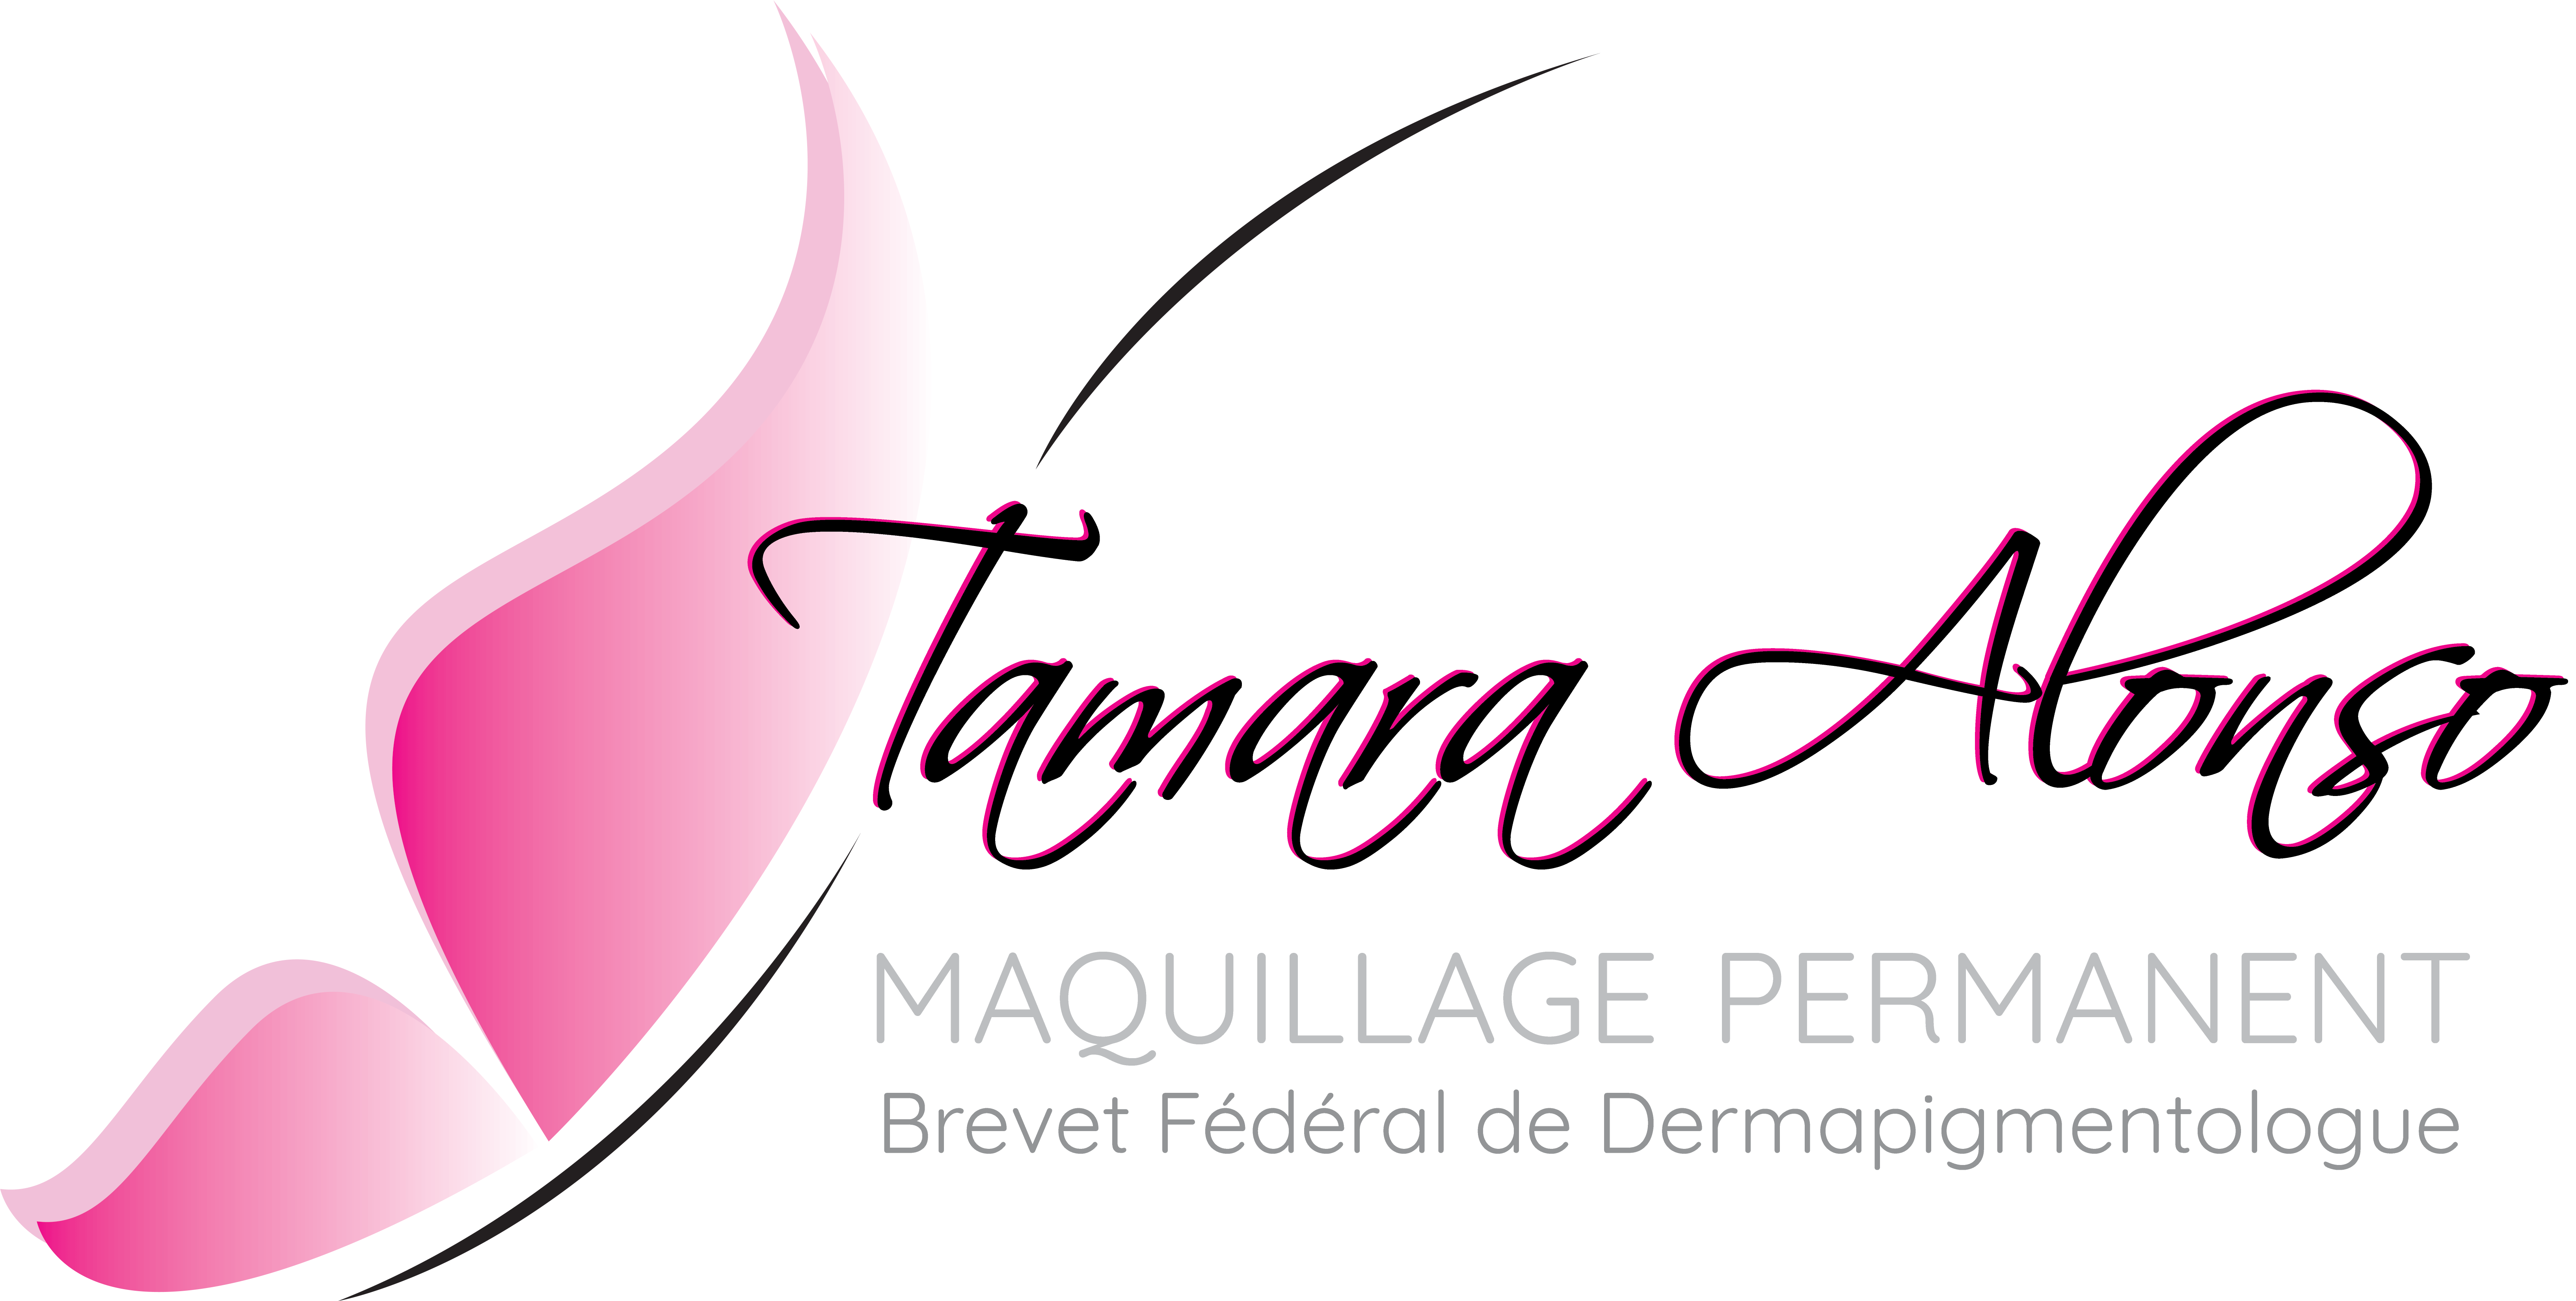 logo-tamara-alonso-maquillage-permanent-brevet-federal-dermapigmentologue